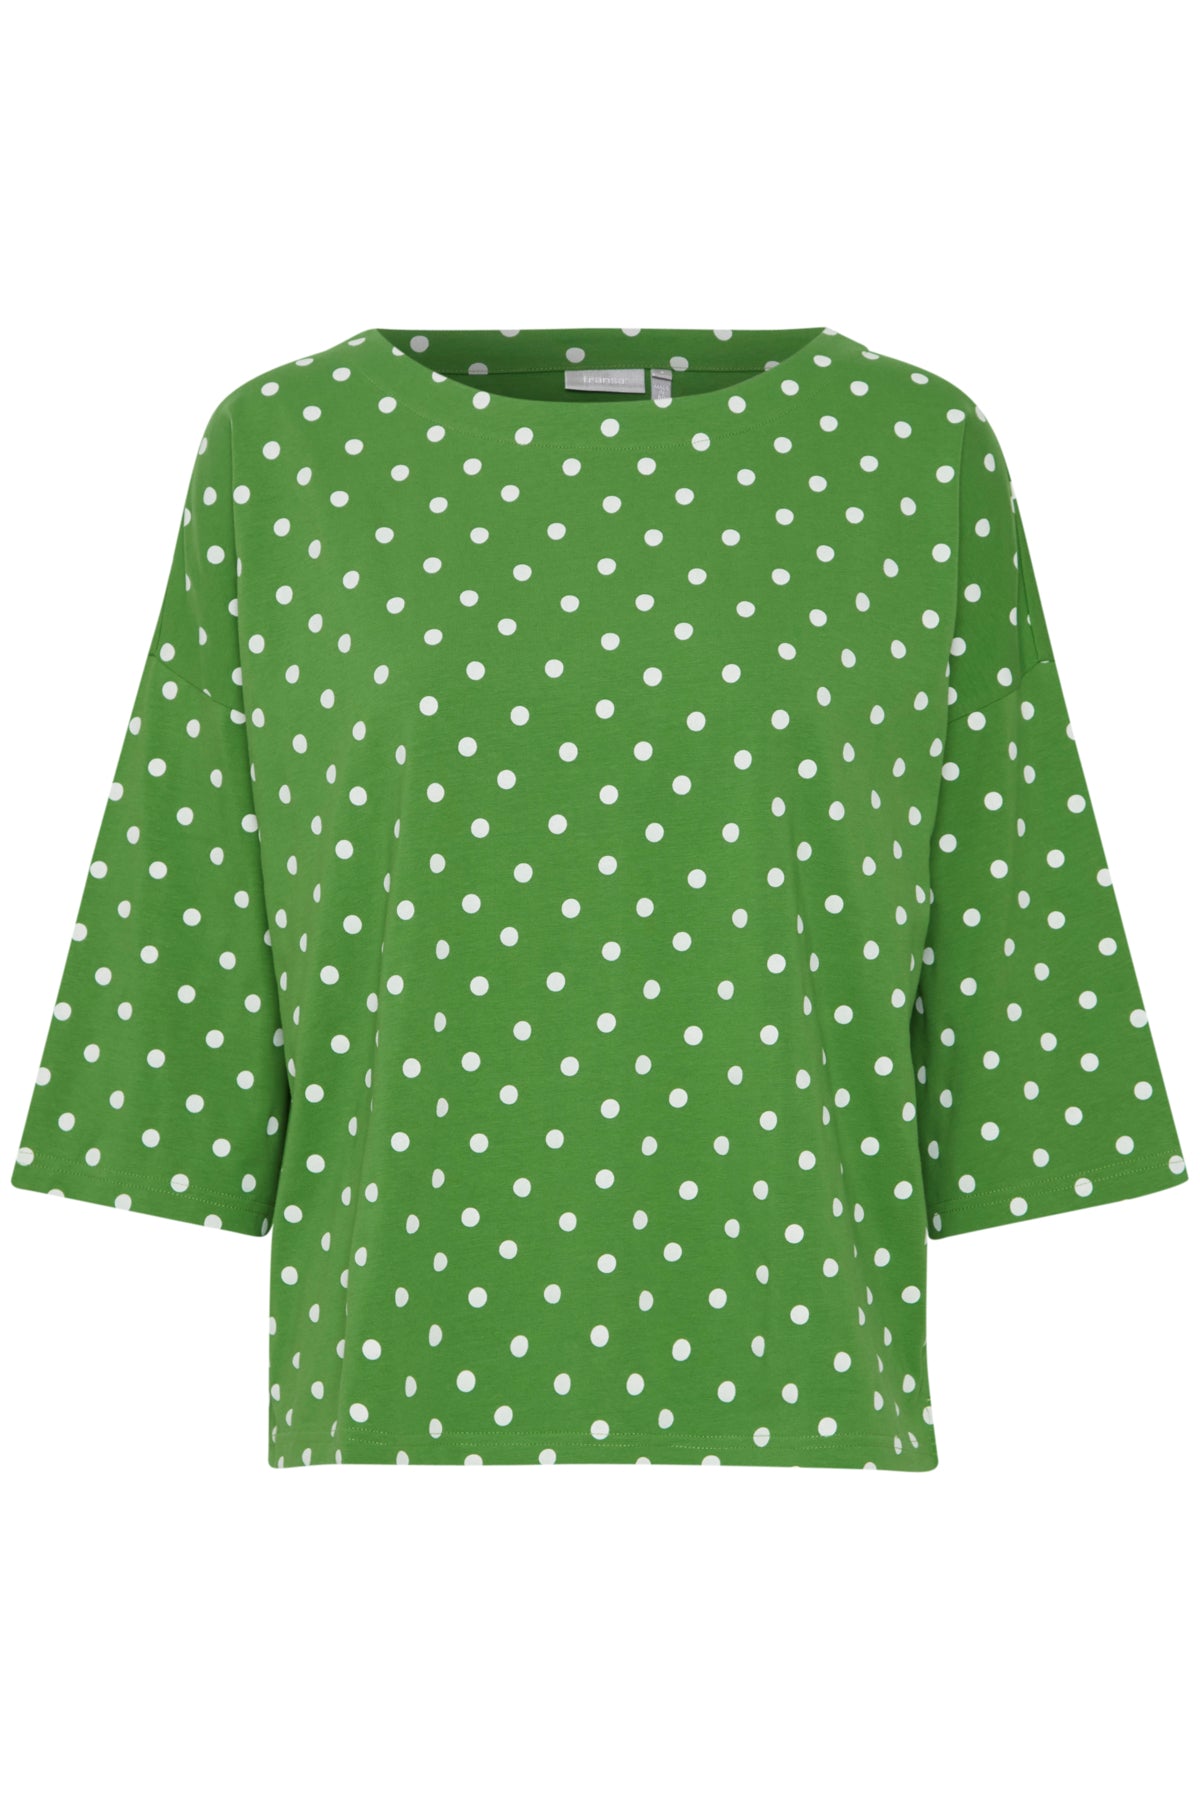 Fransa Siva Green Polka Dot Cotton Top